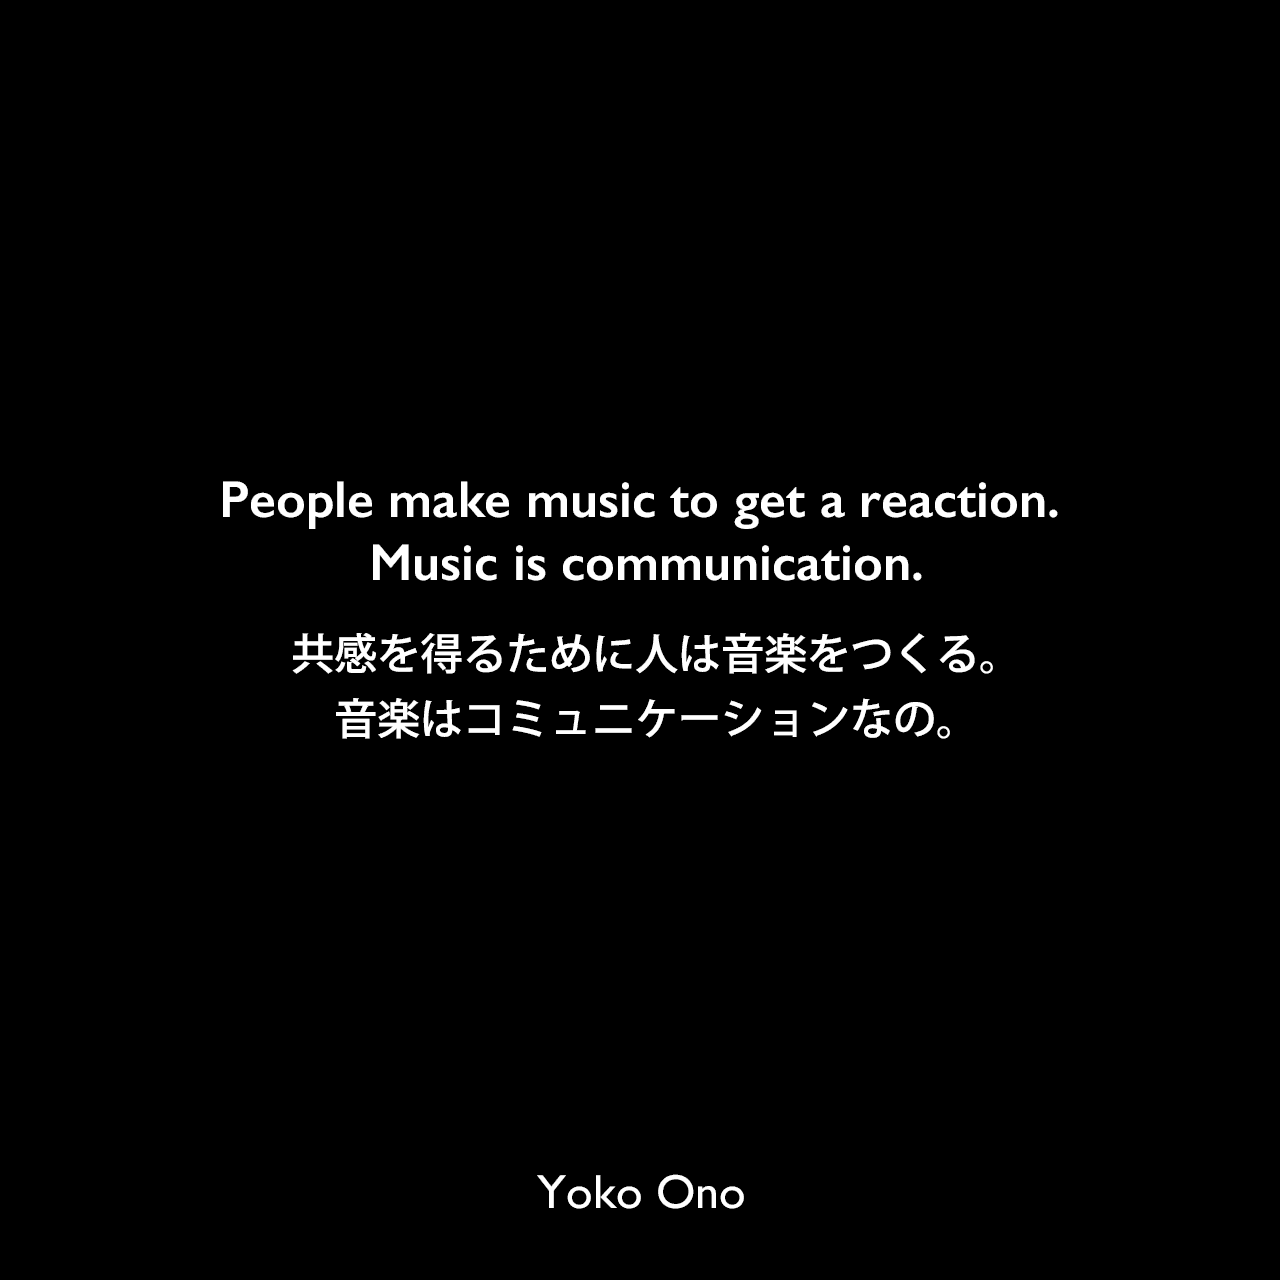 People make music to get a reaction. Music is communication.共感を得るために人は音楽をつくる。音楽はコミュニケーションなの。Yoko Ono